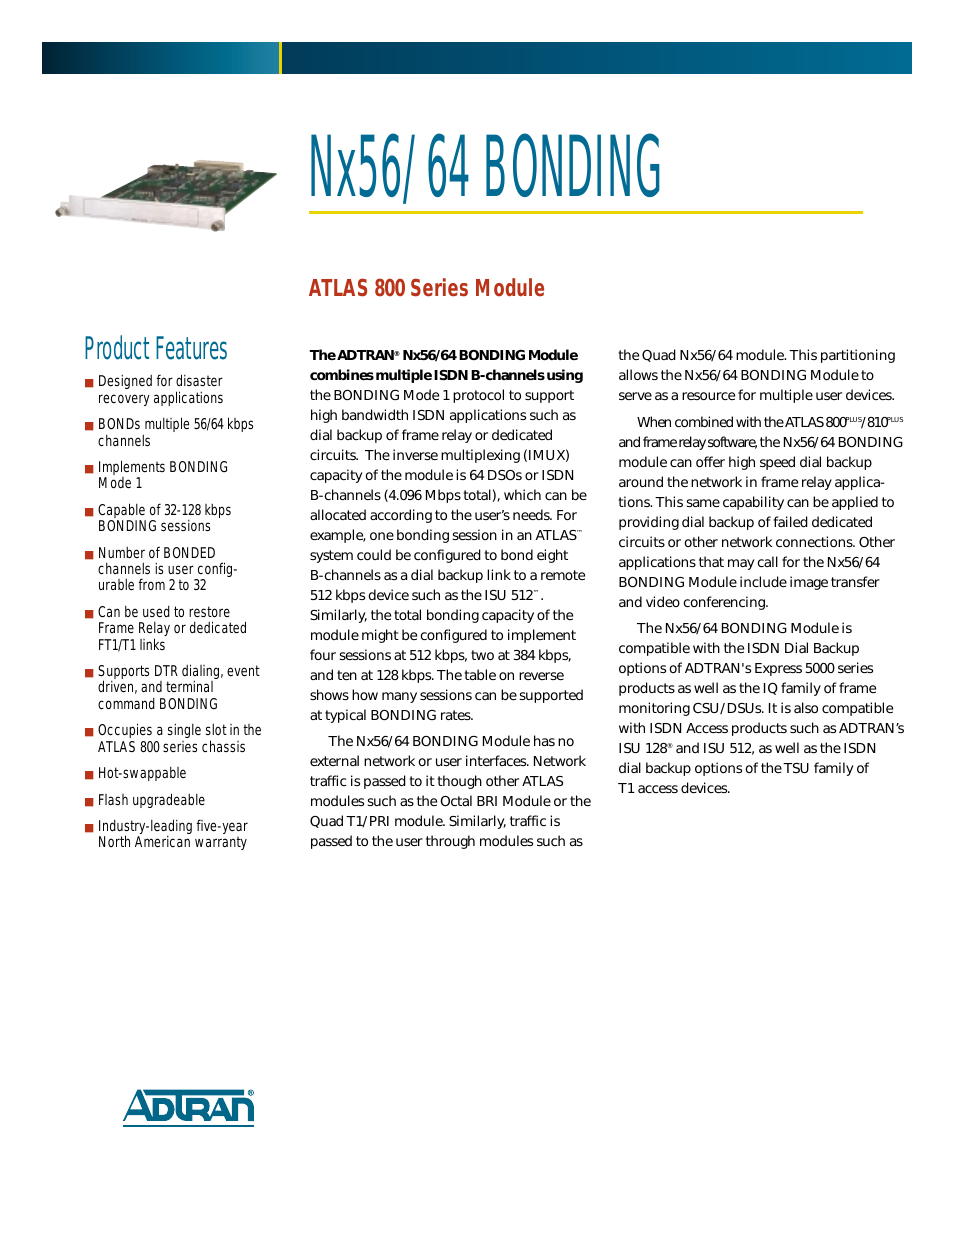 ATLAS 800 Series Module Nx56/64 Bonding